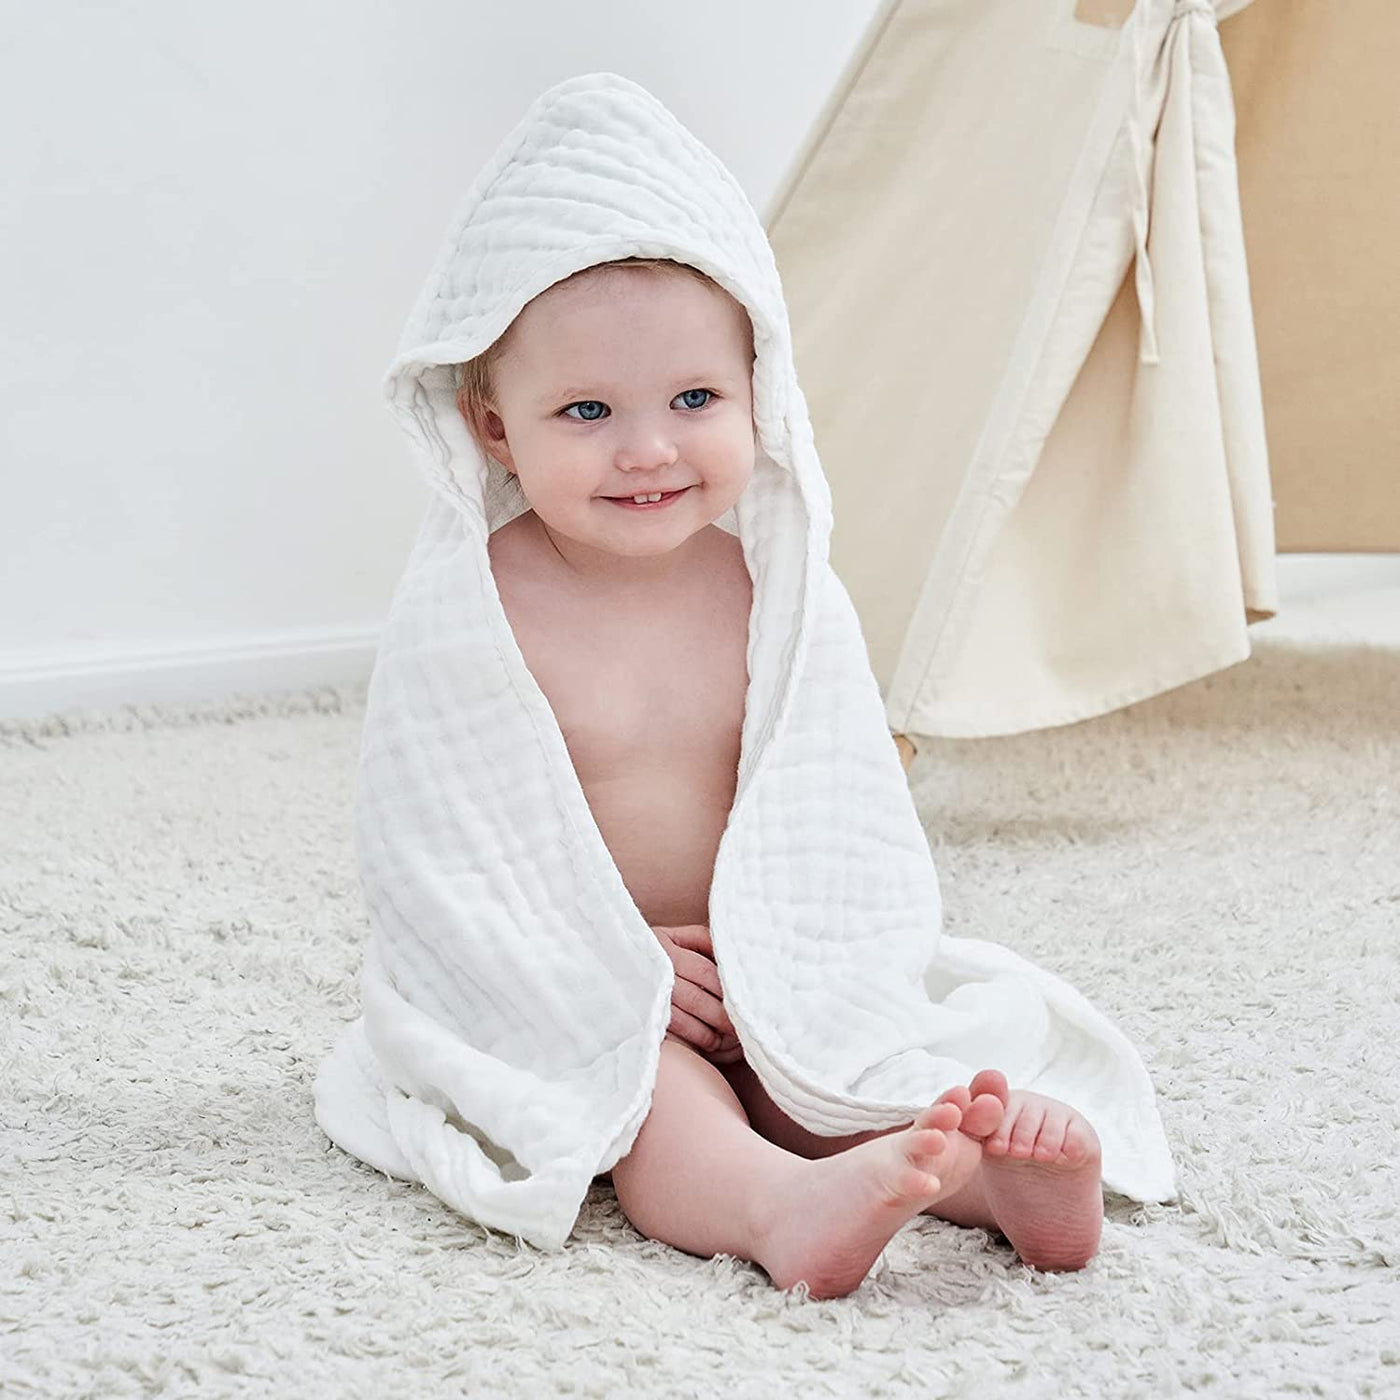 Bebe Comfort Baby Muslin Hooded Swaddle Blanket 76 x 76cm BC51508 - Little Kooma